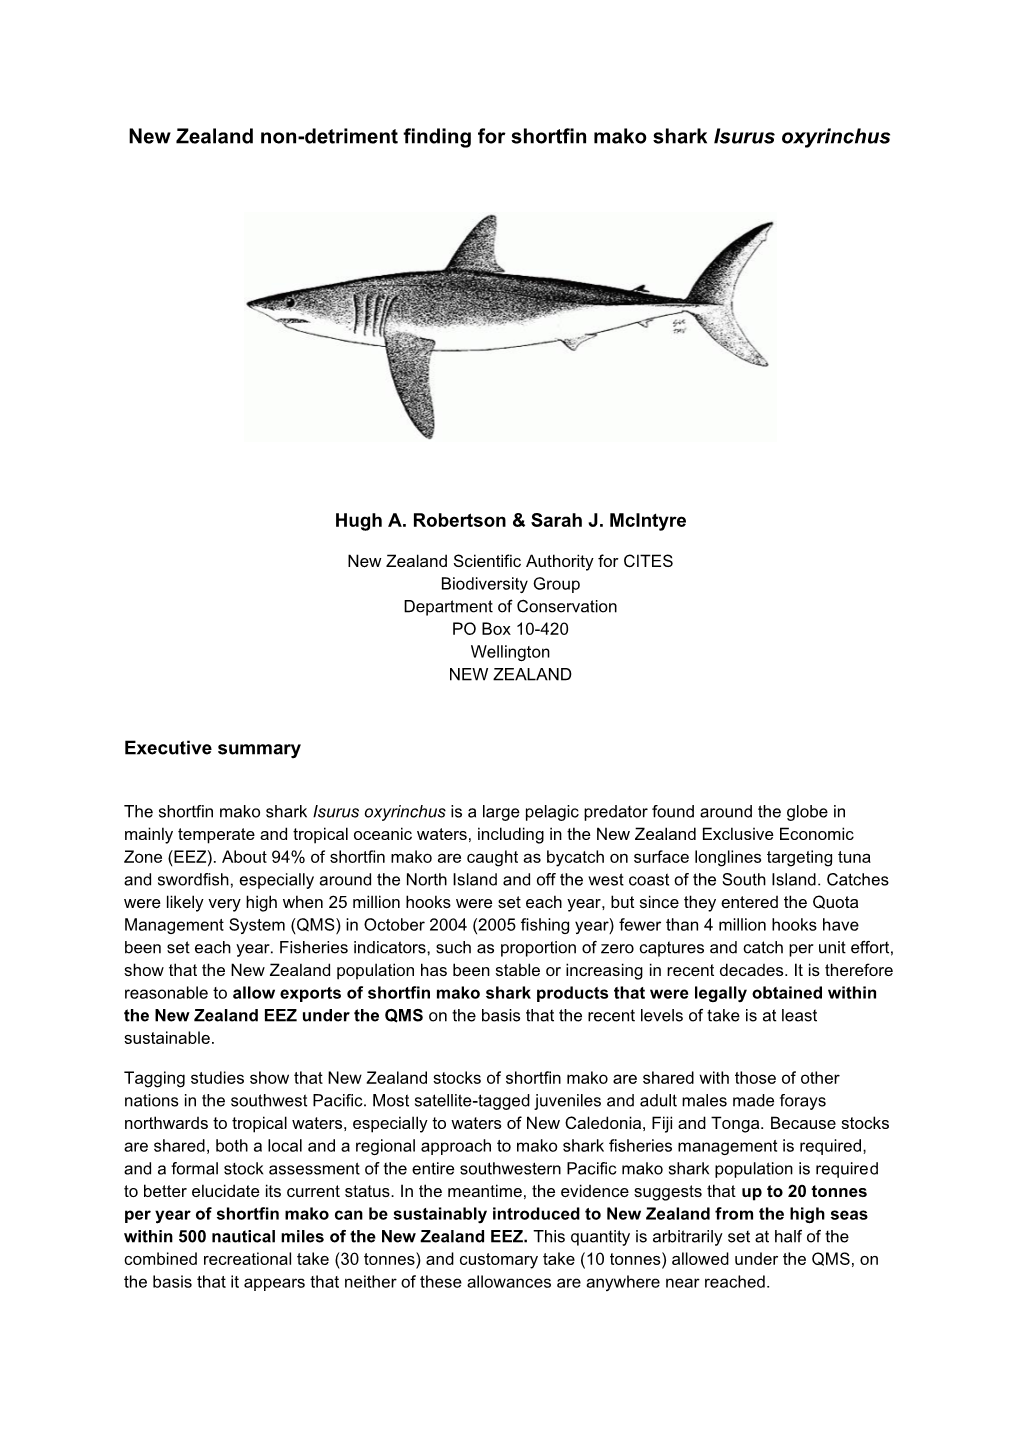 New Zealand Non-Detriment Finding for Shortfin Mako Shark Isurus Oxyrinchus